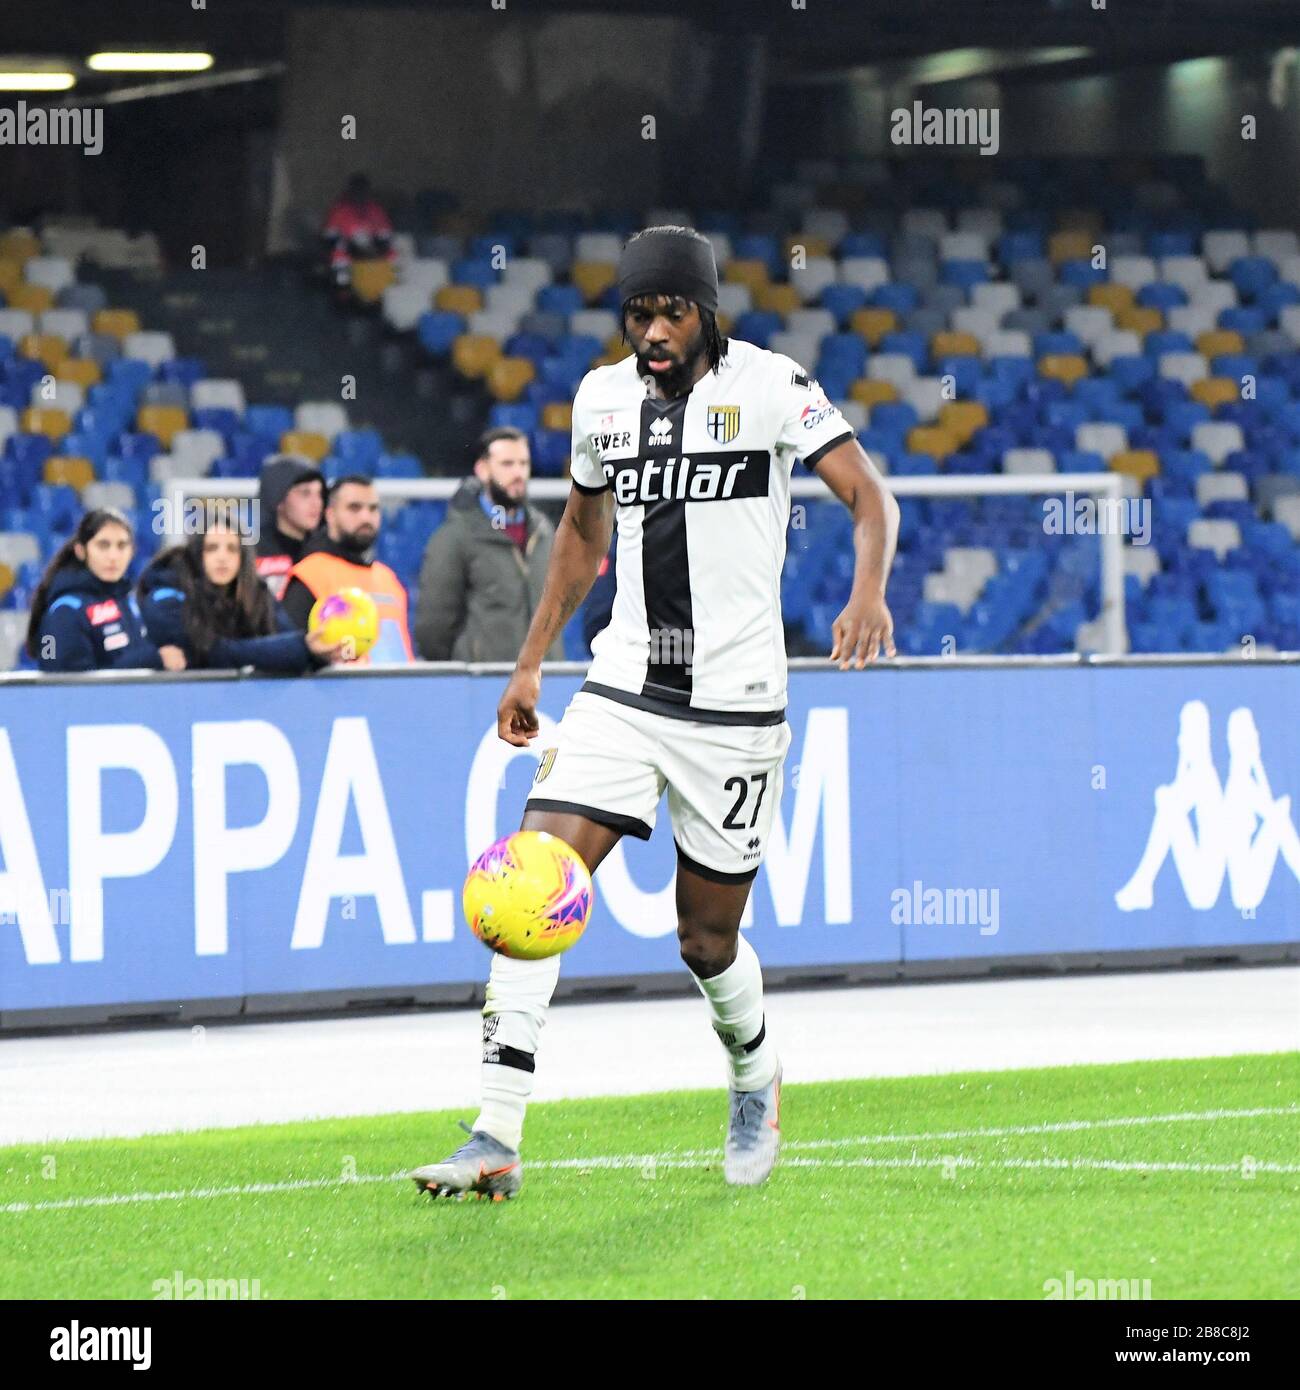 gervinho (parma) during Italian soccer Serie A season 2019/20, napoli, Italy, 01 Jan 2020, Soccer italian Serie A soccer match Stock Photo